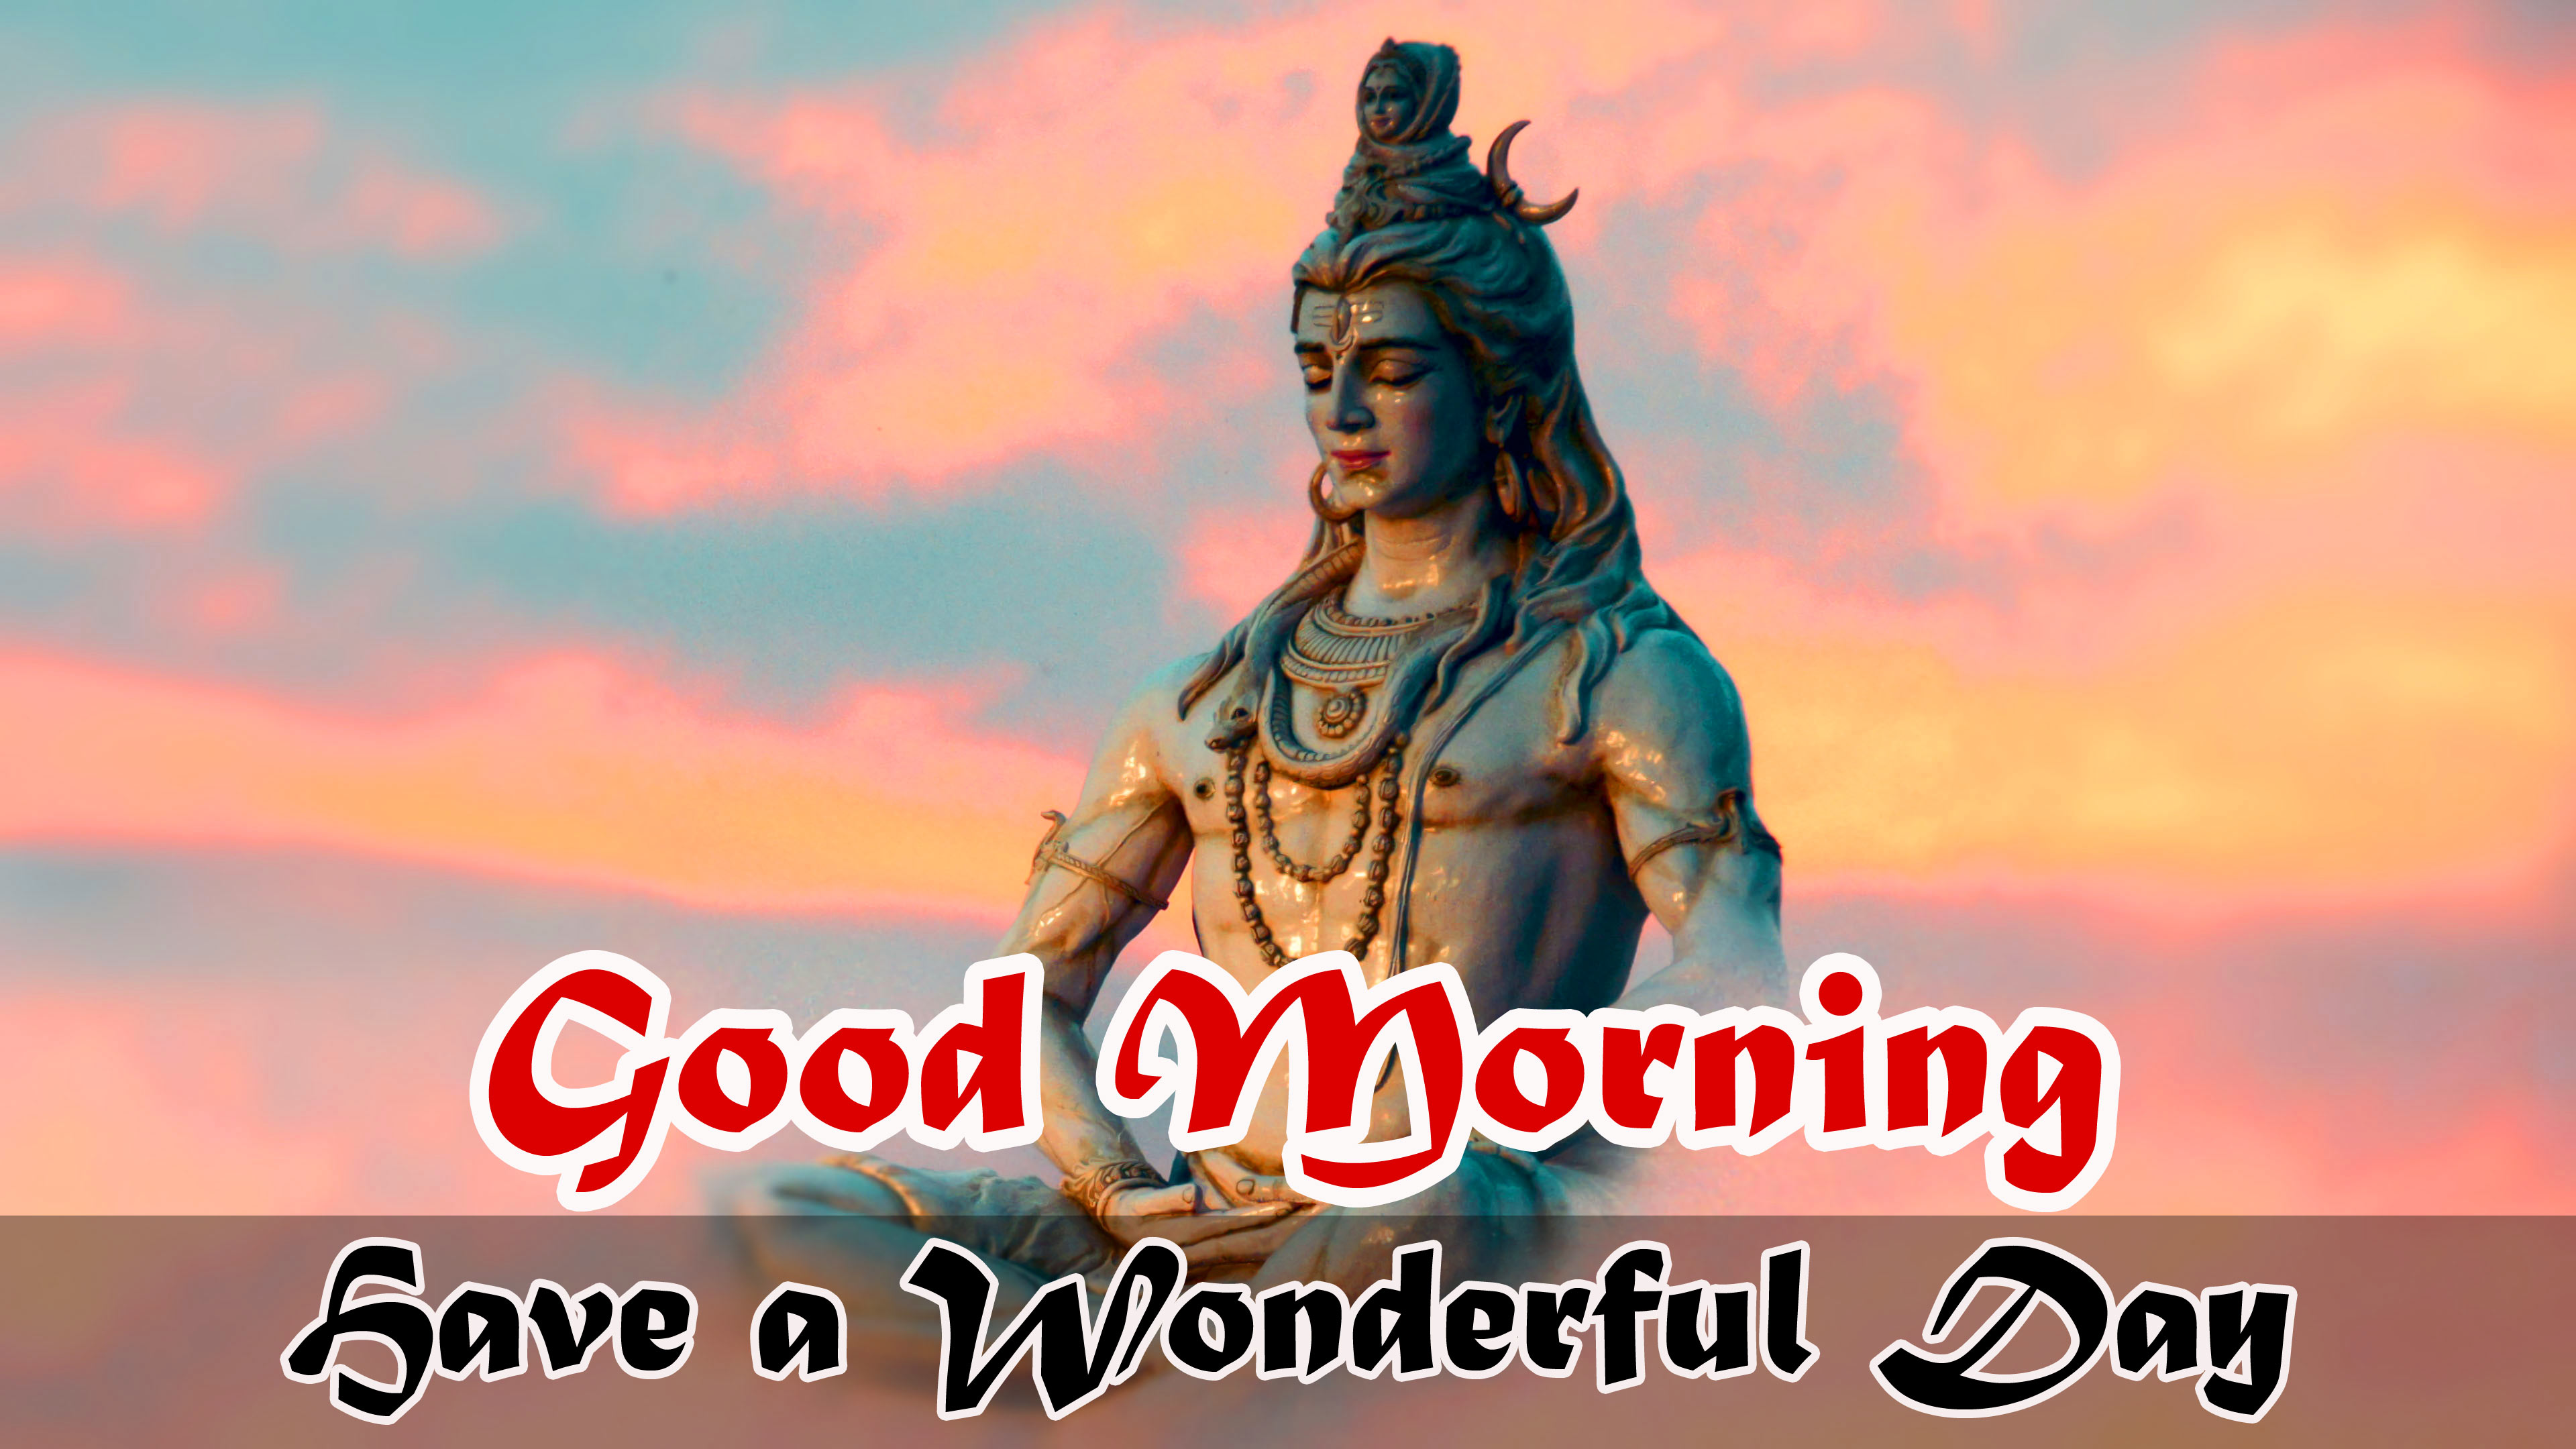 Lord shiva good morning Pics Download